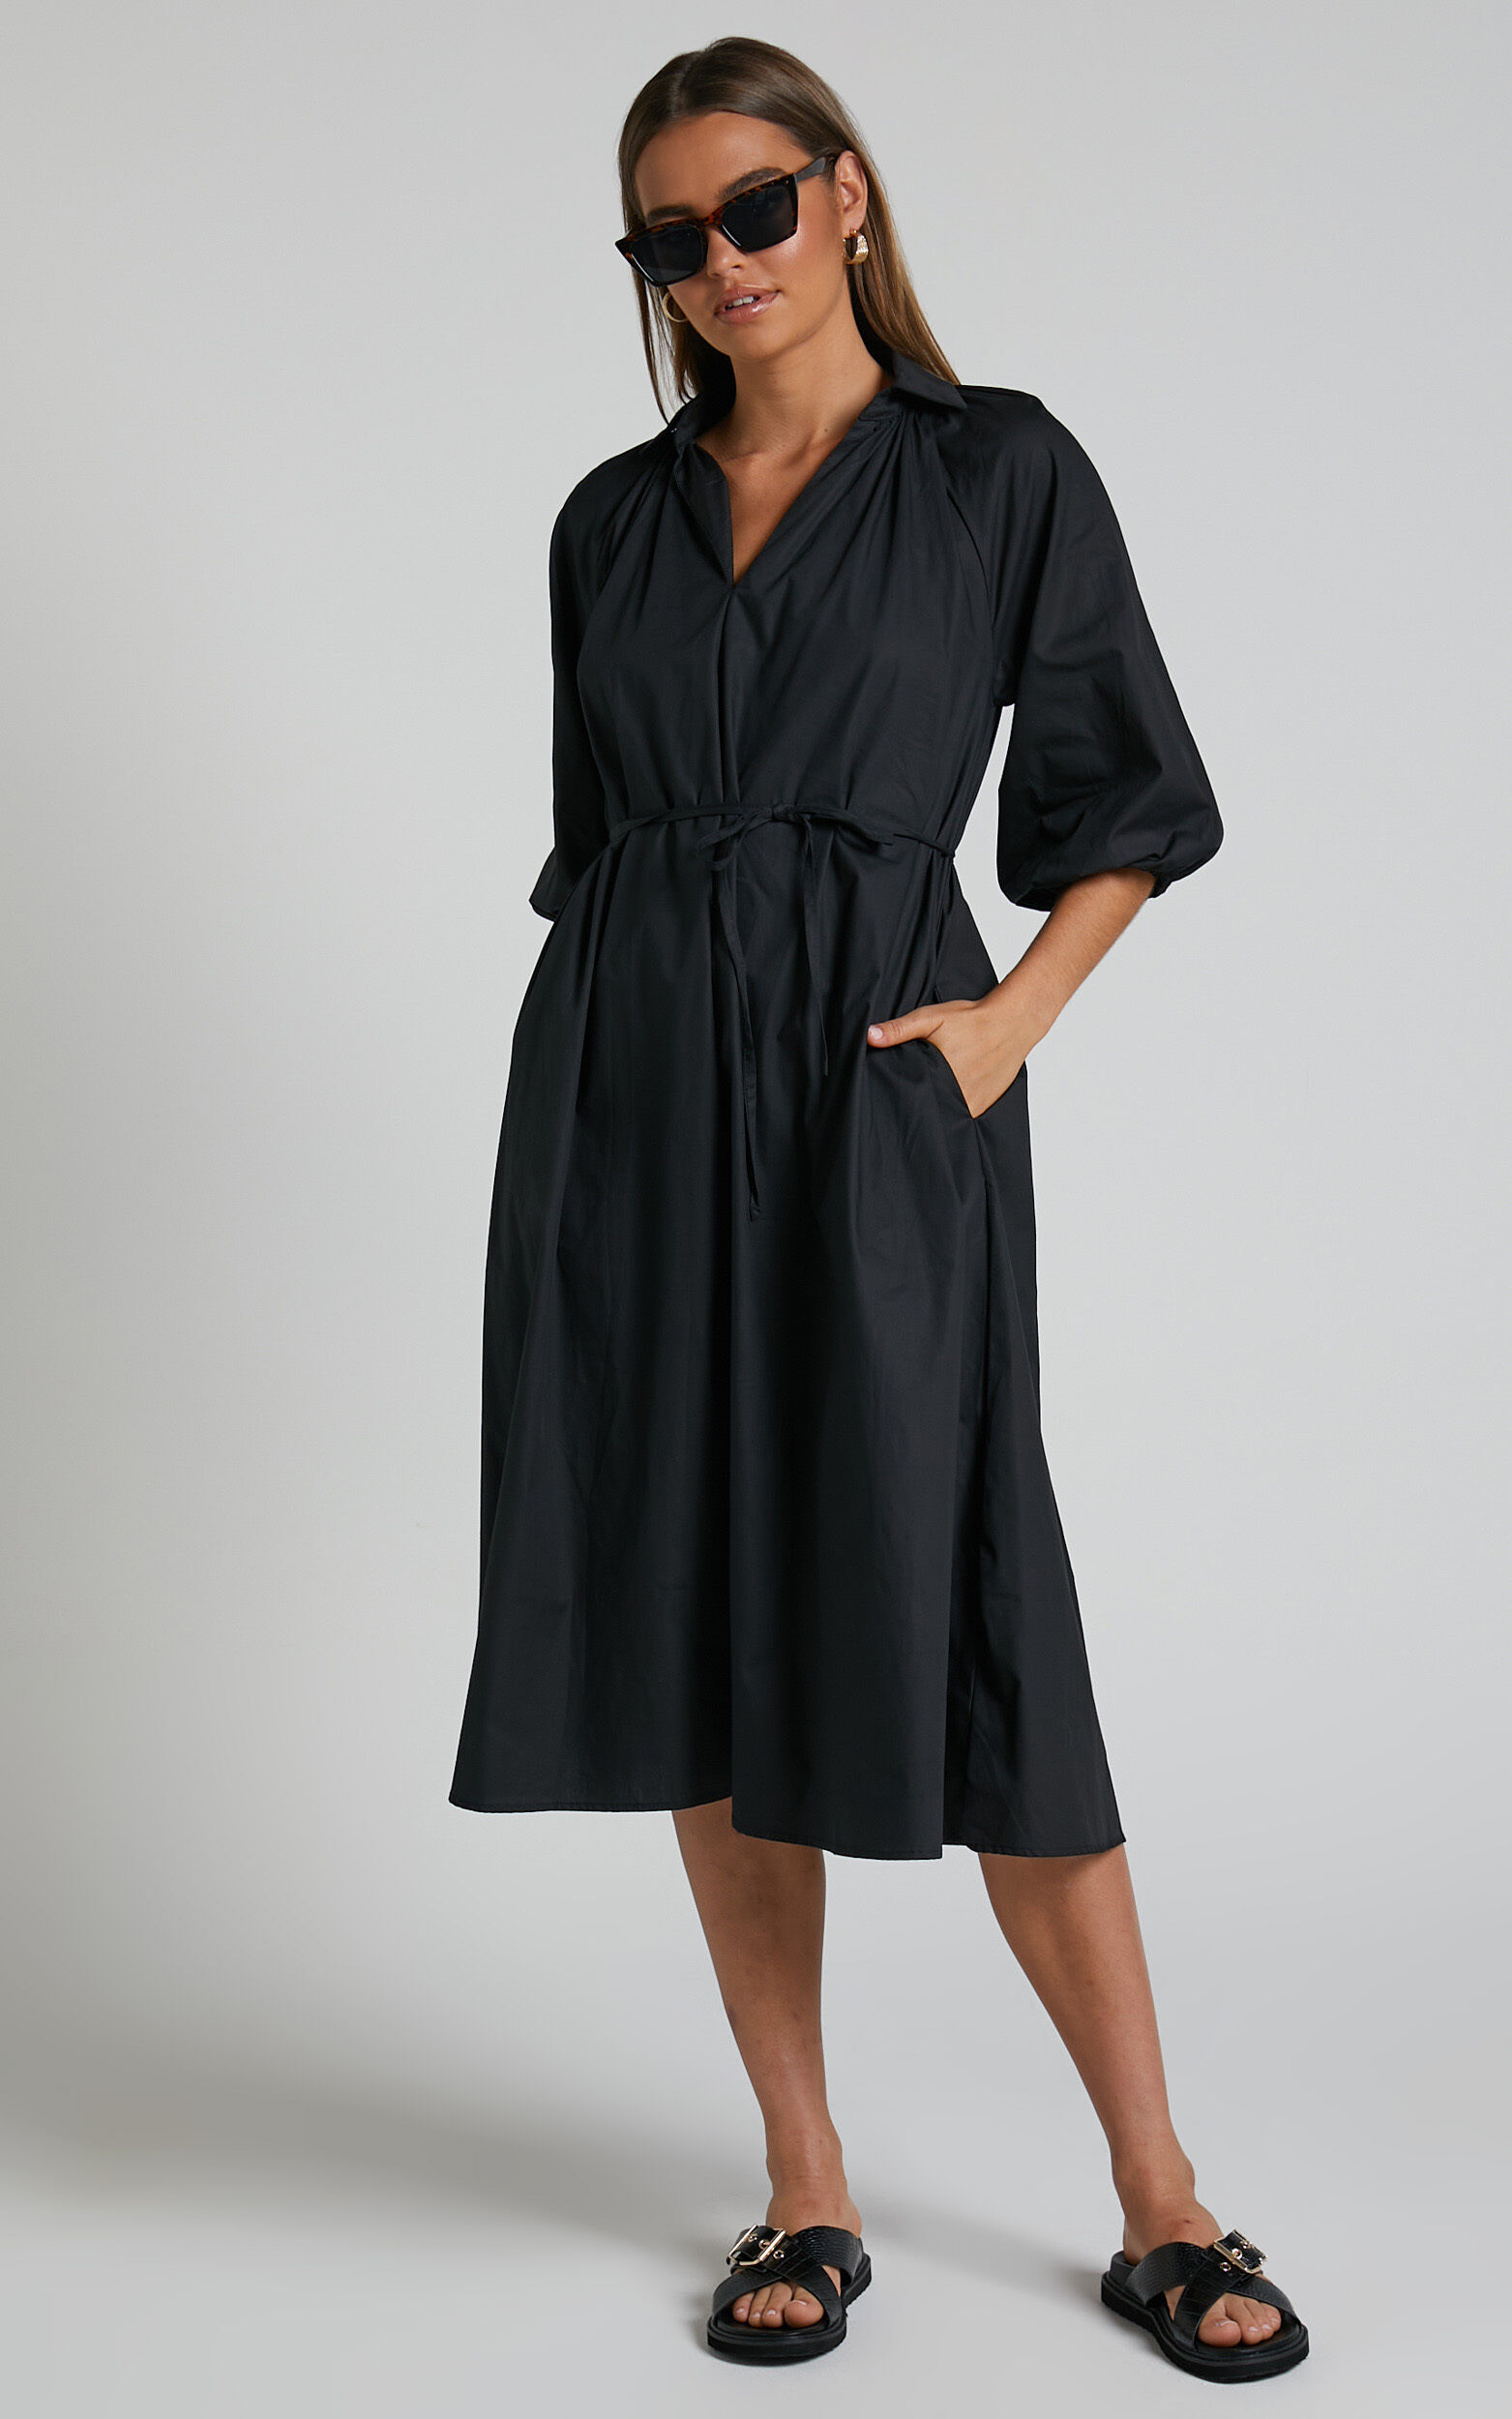 Simone Long Sleeve Wrap Midid Dress in Black - 06, BLK1